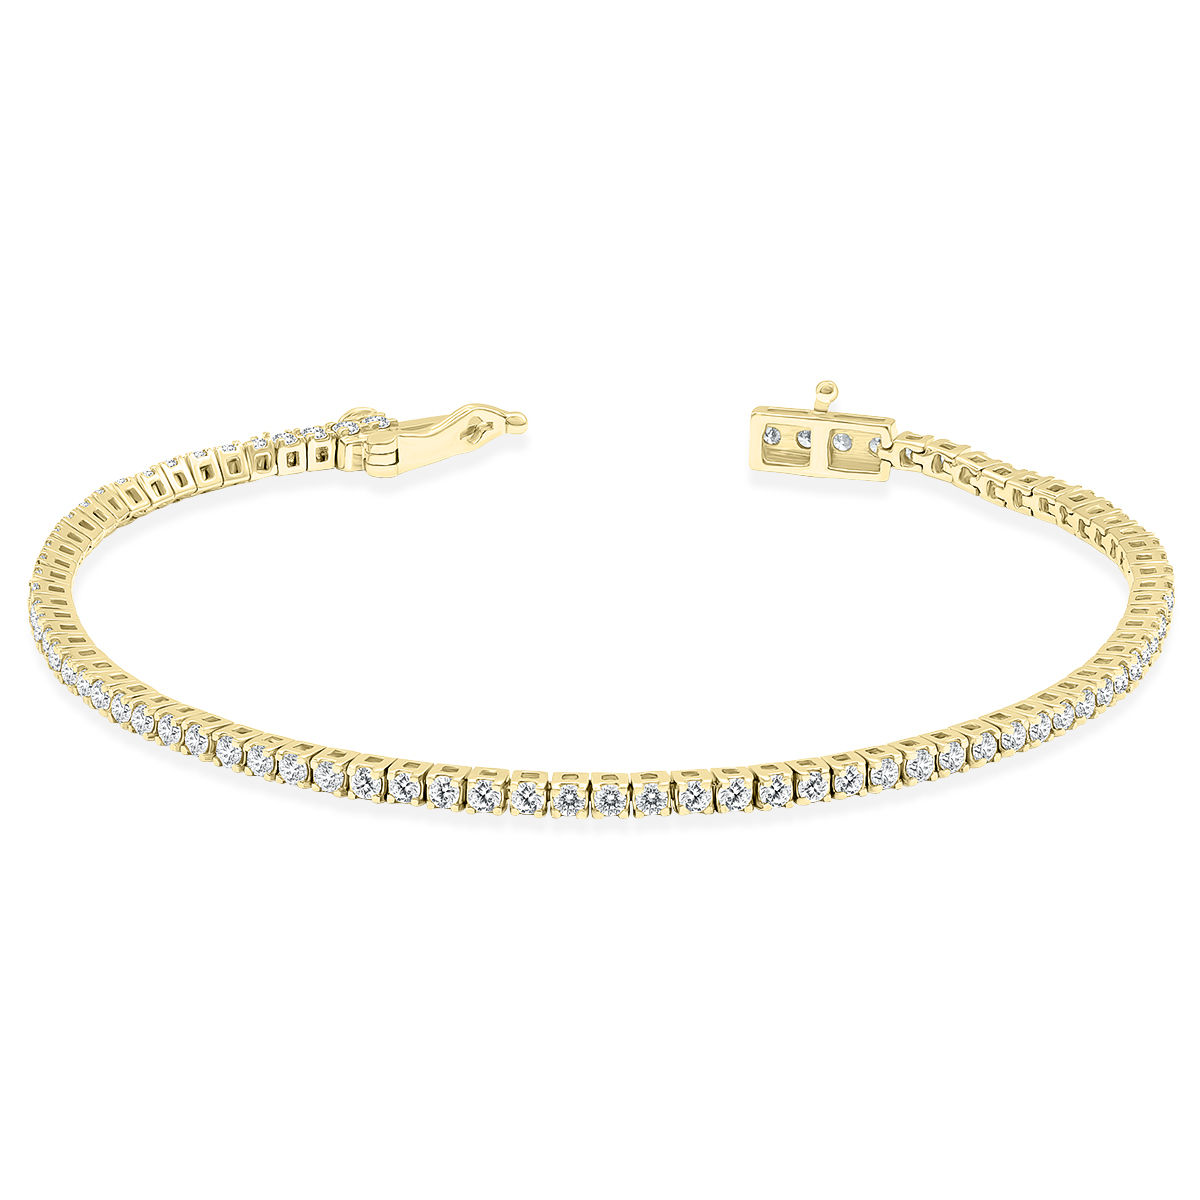 2 Carat TW Diamond Tennis Bracelet in 14K Yellow Gold